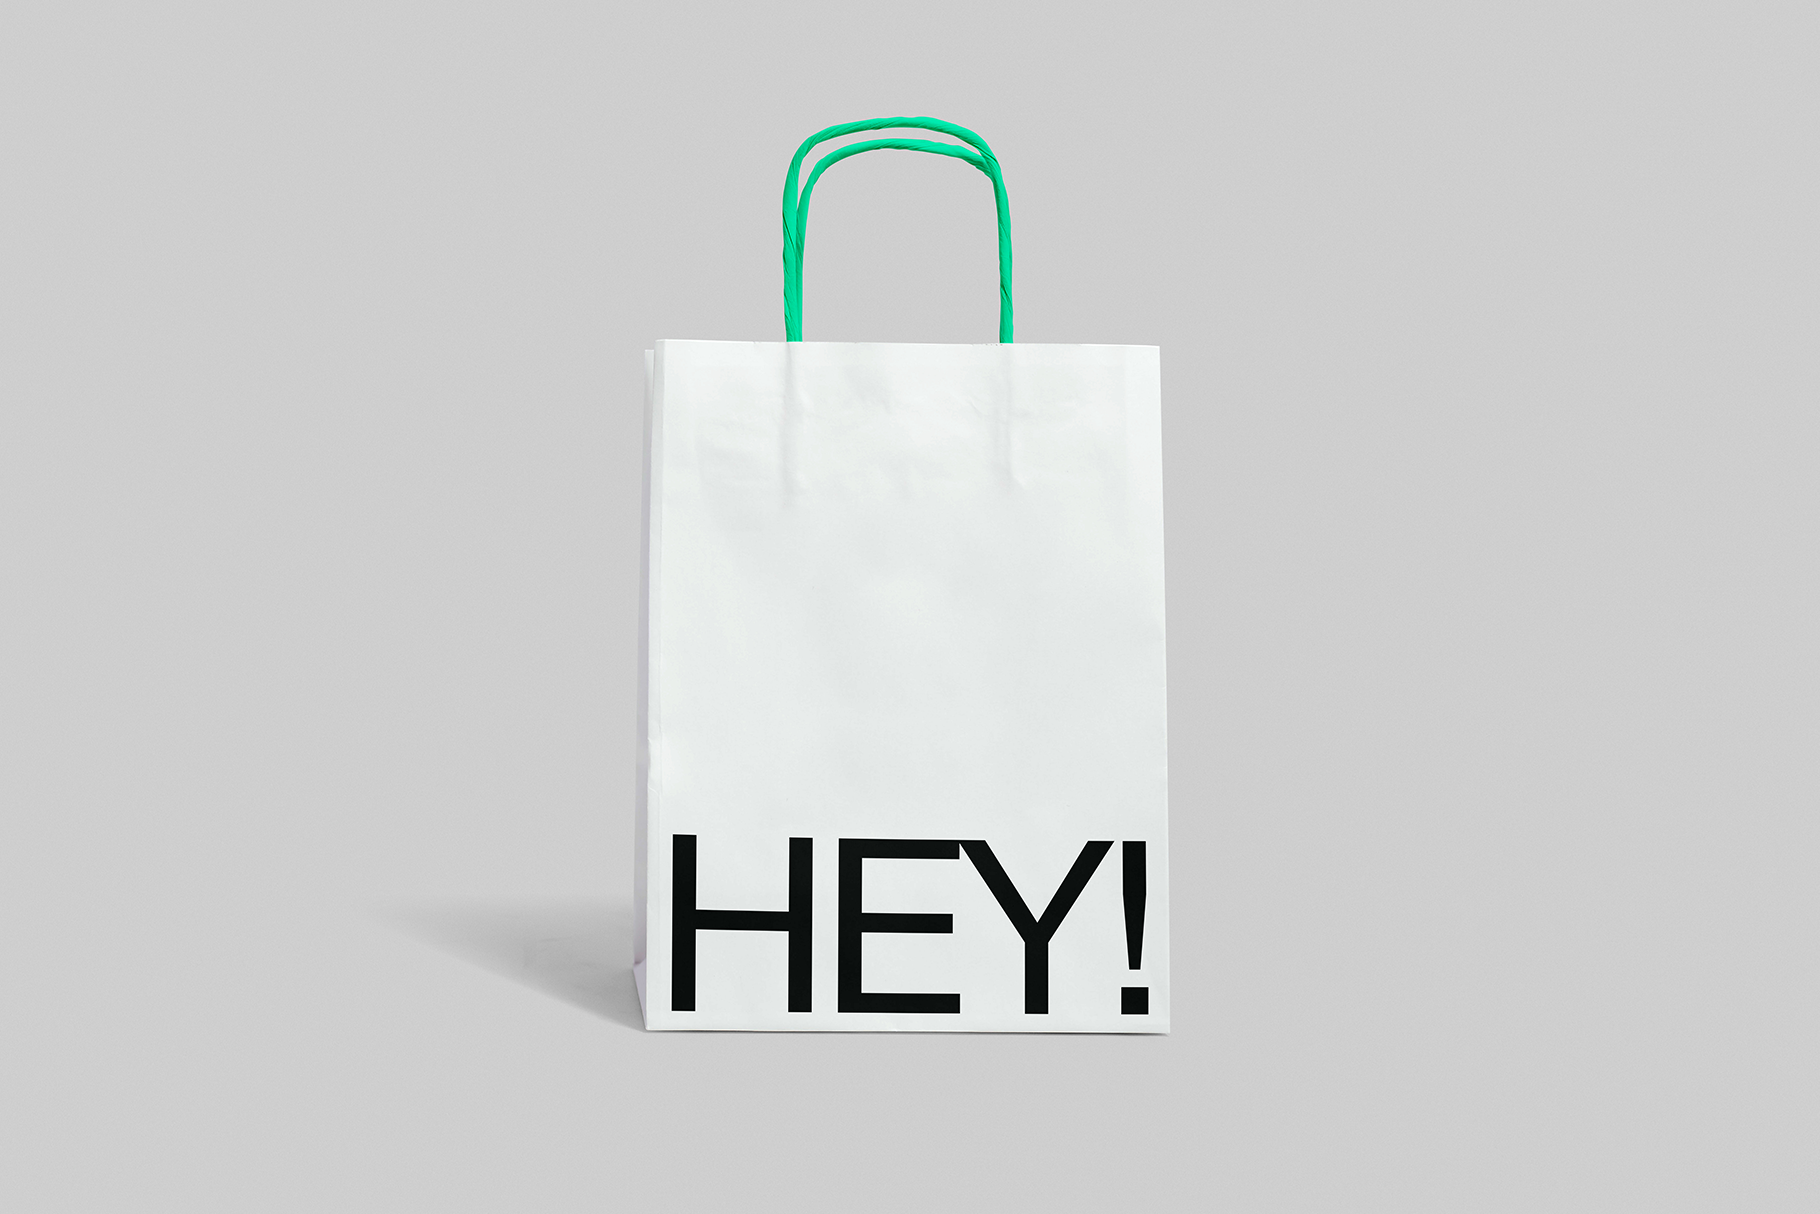 Free Paper Bag Mockup PSD for Shopping 2023 - Daily Mockup